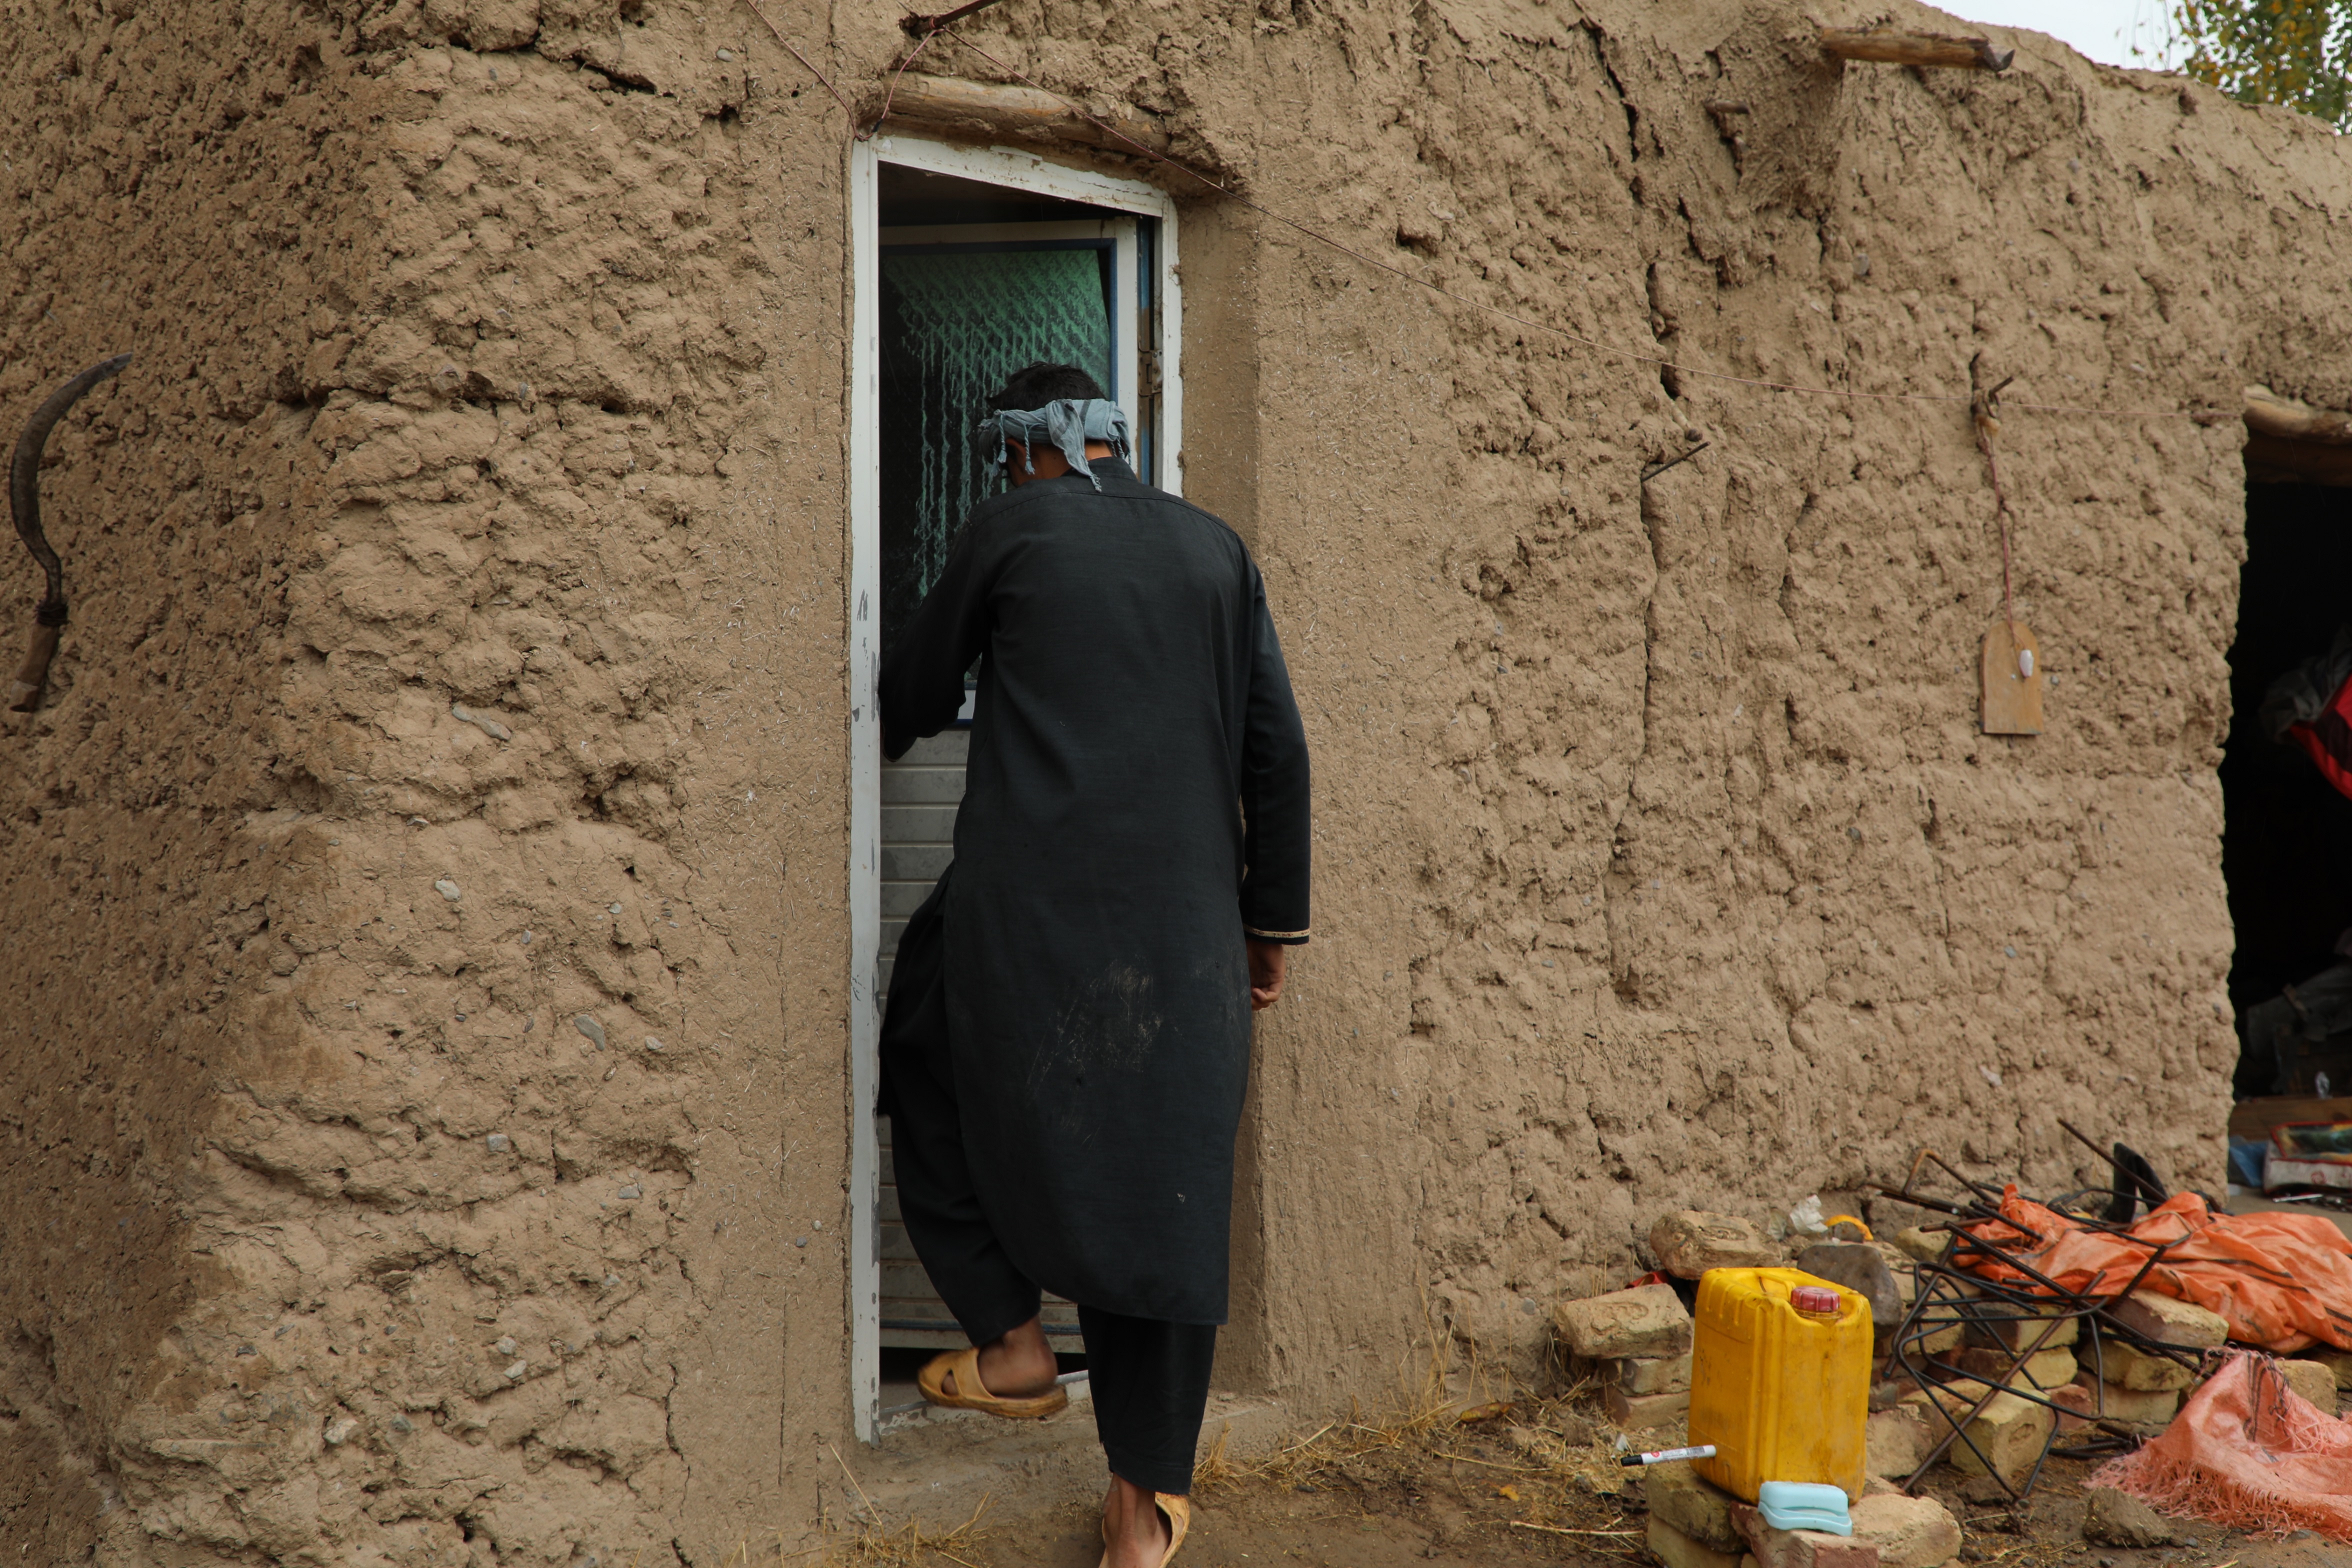 Nasim is using local latrine.